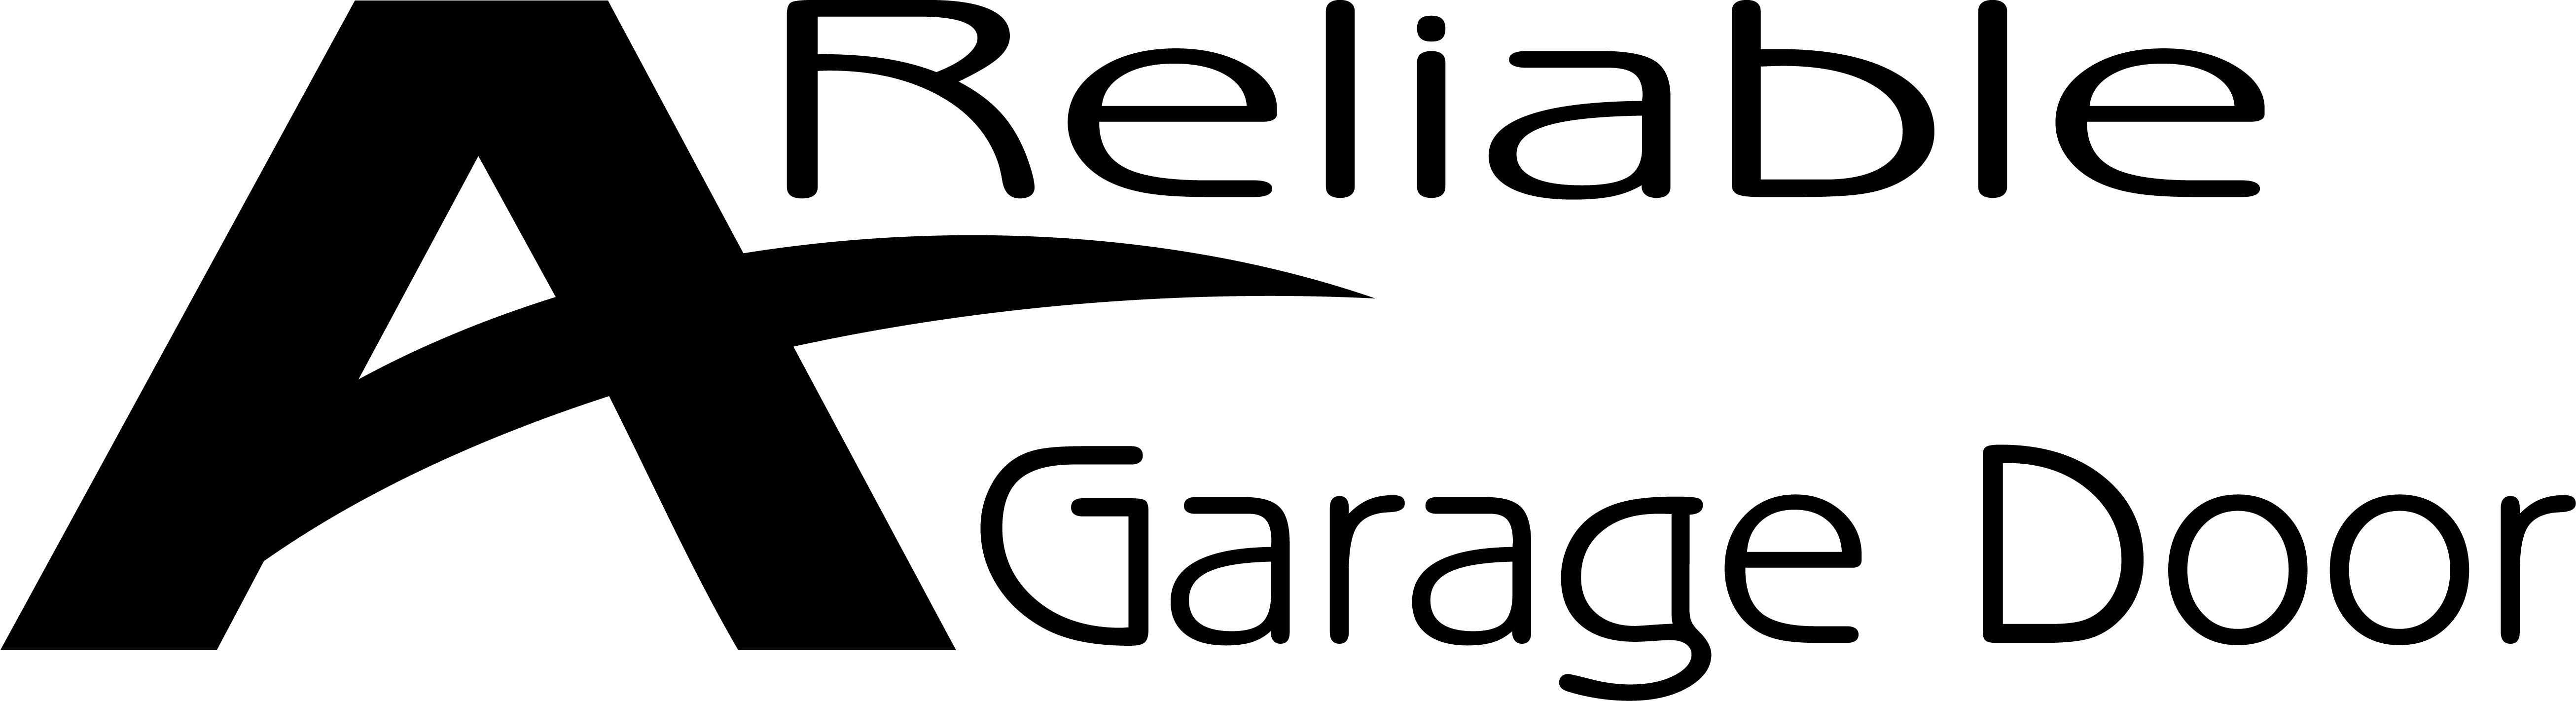 A Reliable Garage Door logo